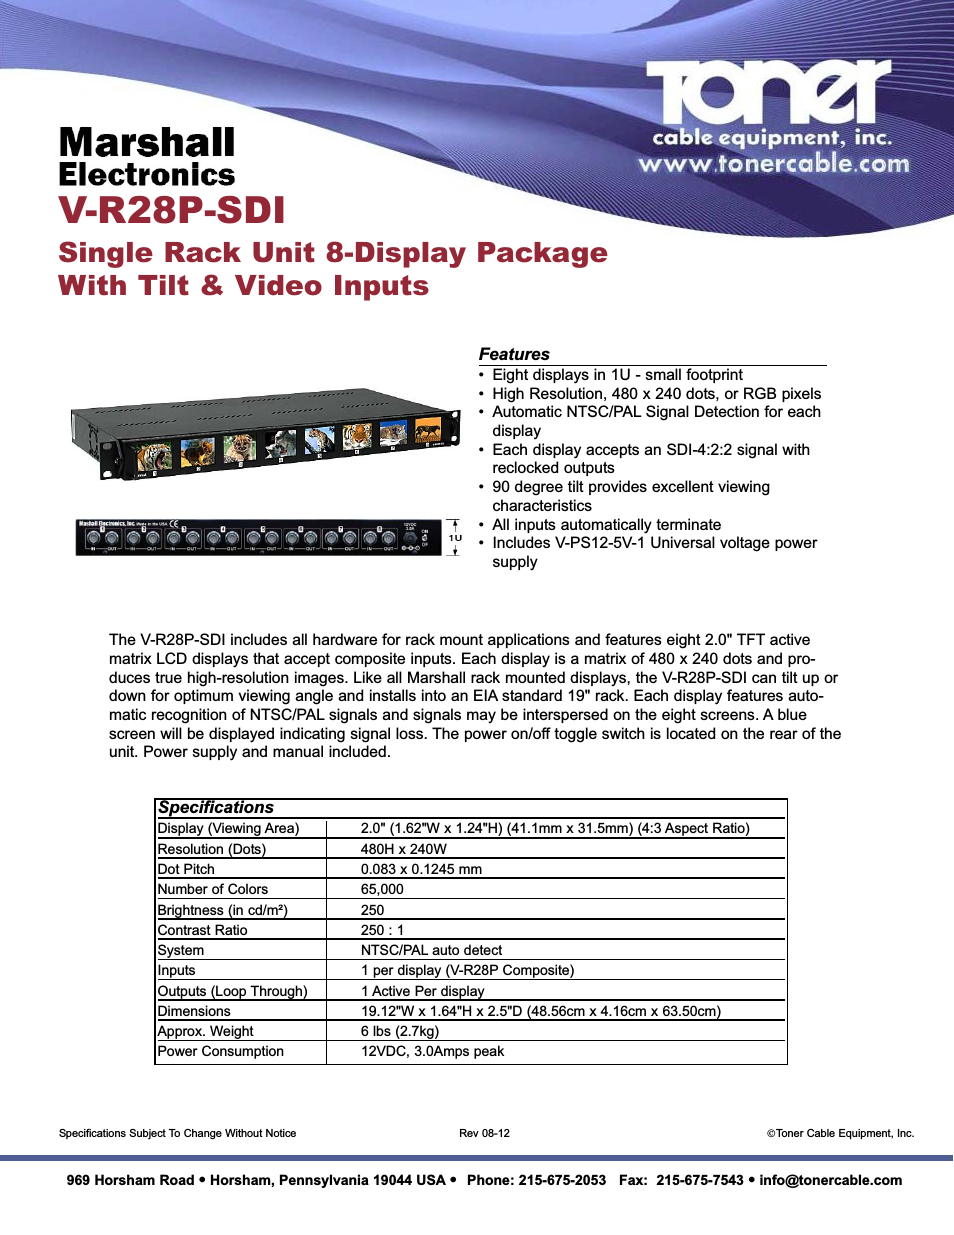 V-R28P-SDI Single Rack Unit 8-Display Package with Tilt & Video Inputs